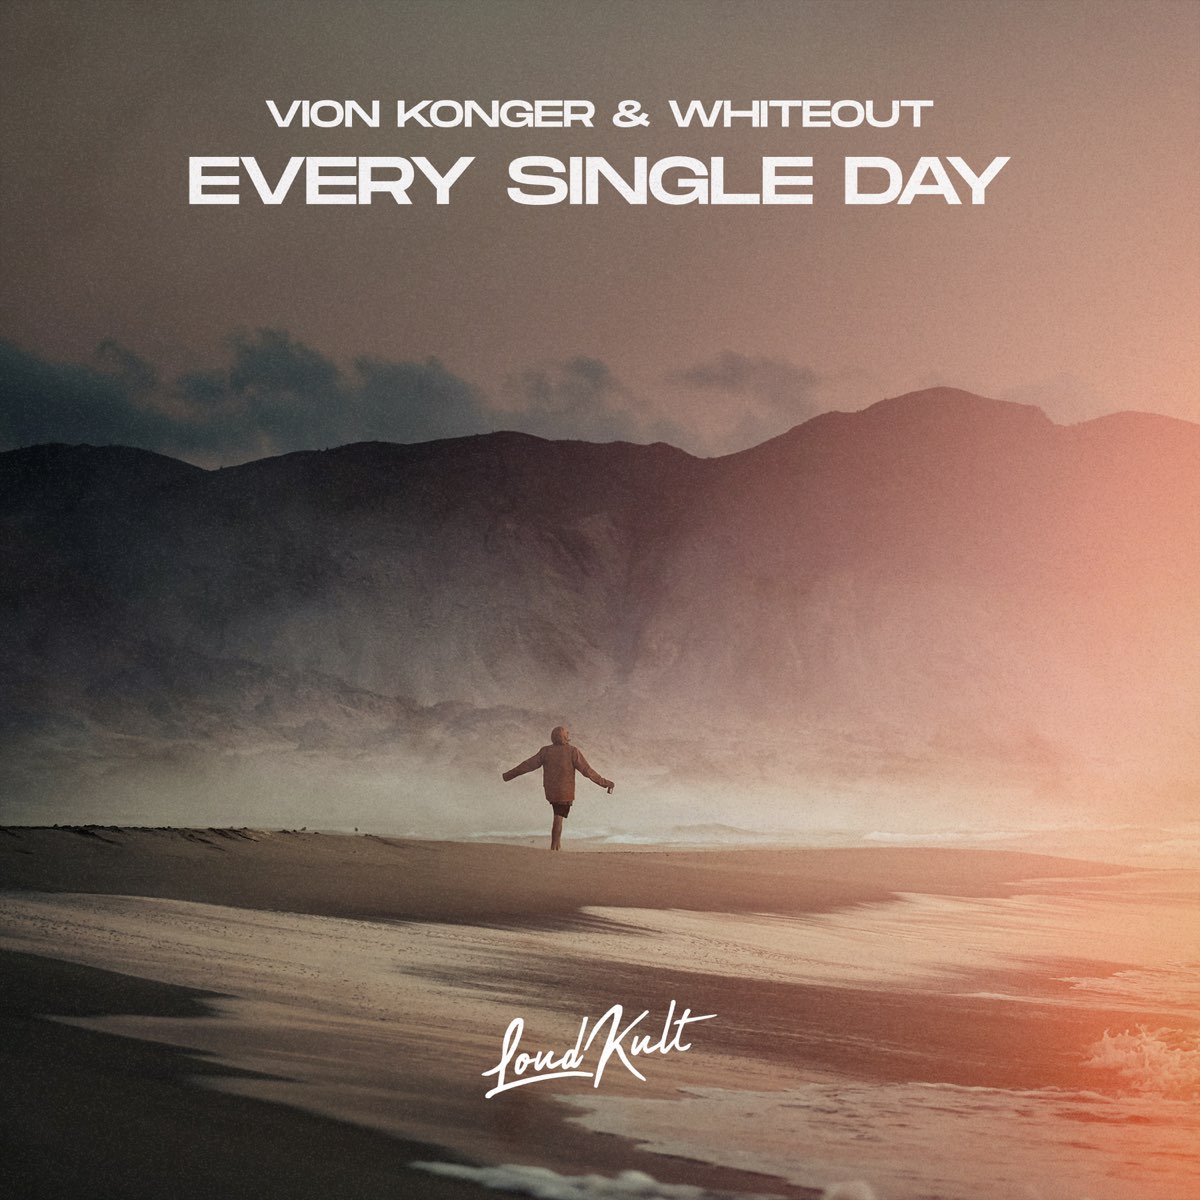 Dhany single day. Every Single Day от Vion Konger & Whiteout. Every Single Day Benassi. Сингл Дэй. Every Single.